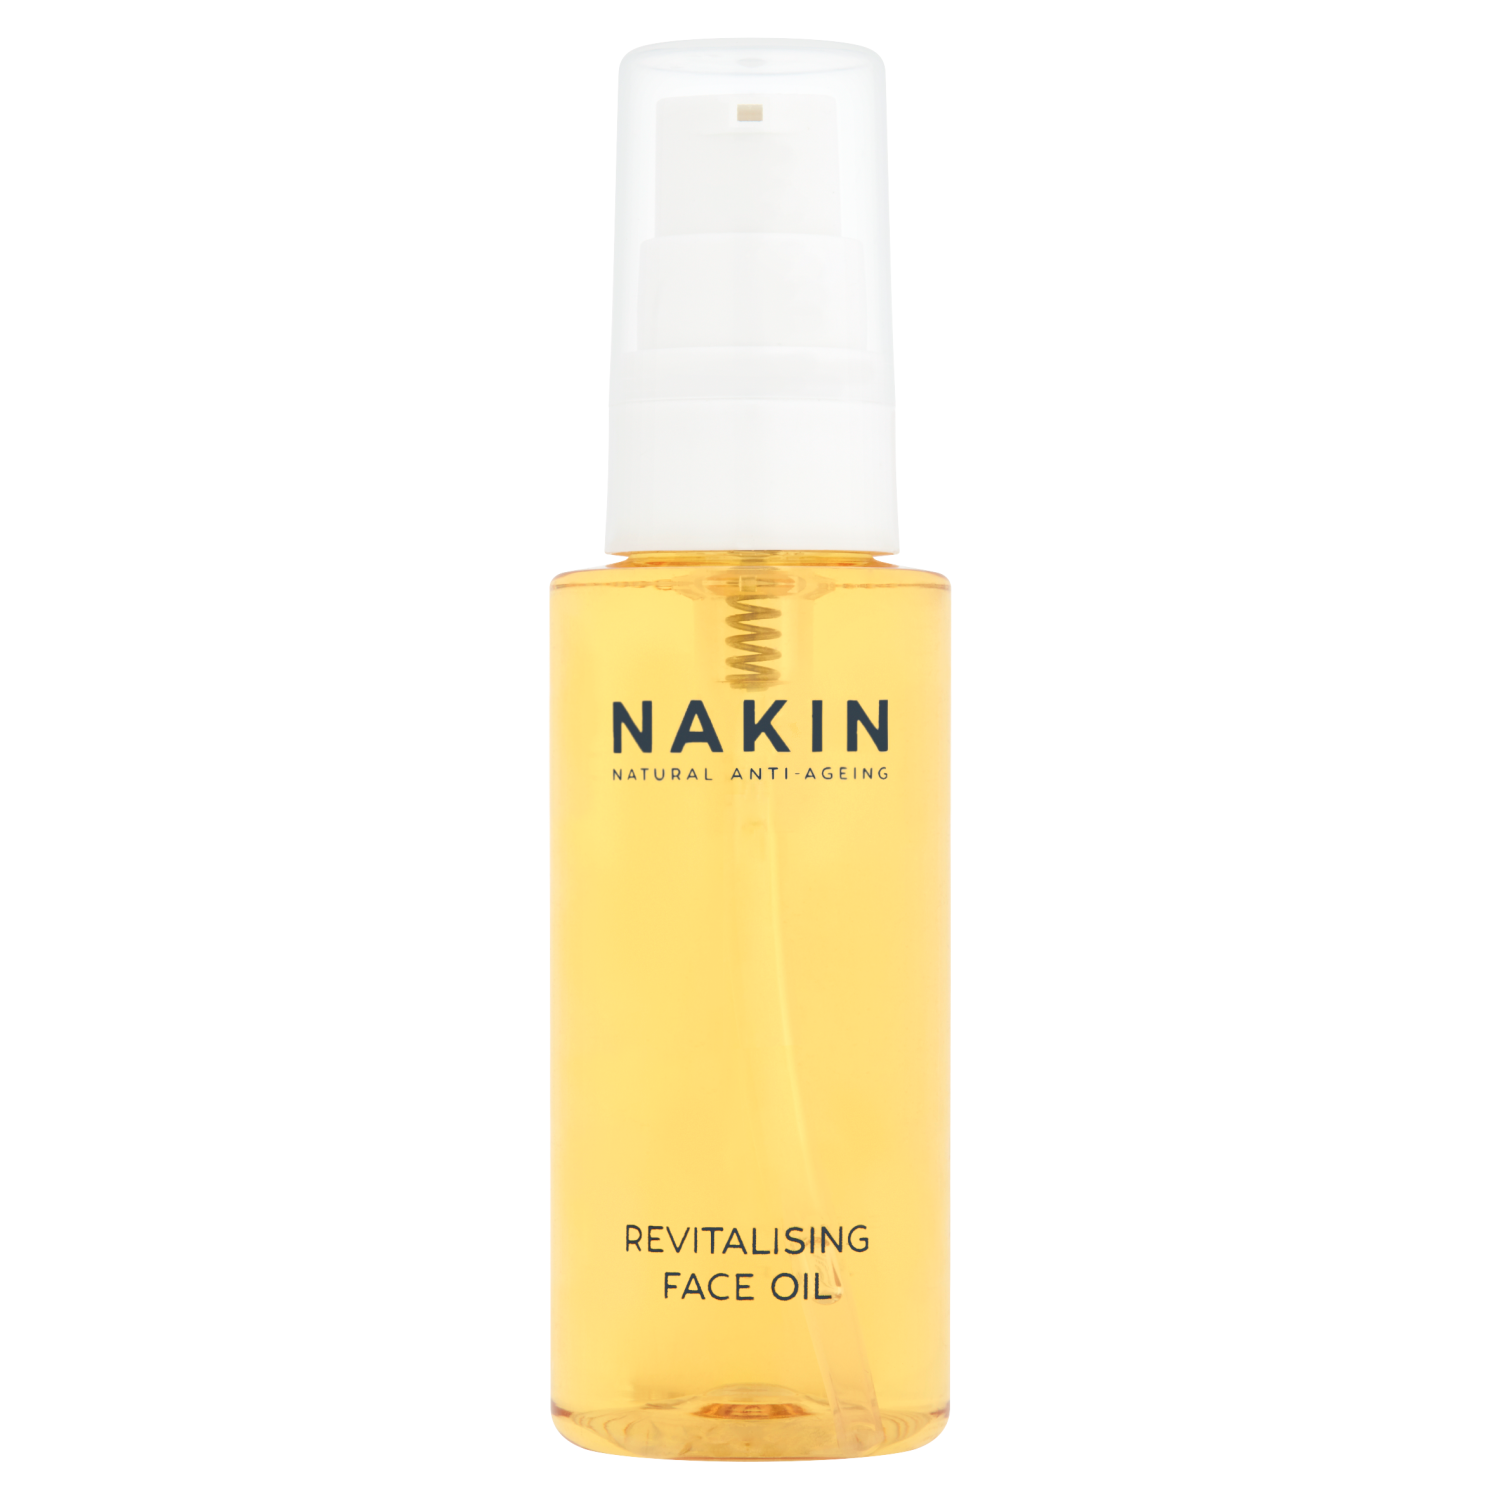 Nakin Natural Anti-Ageing Revitalising Face Oil